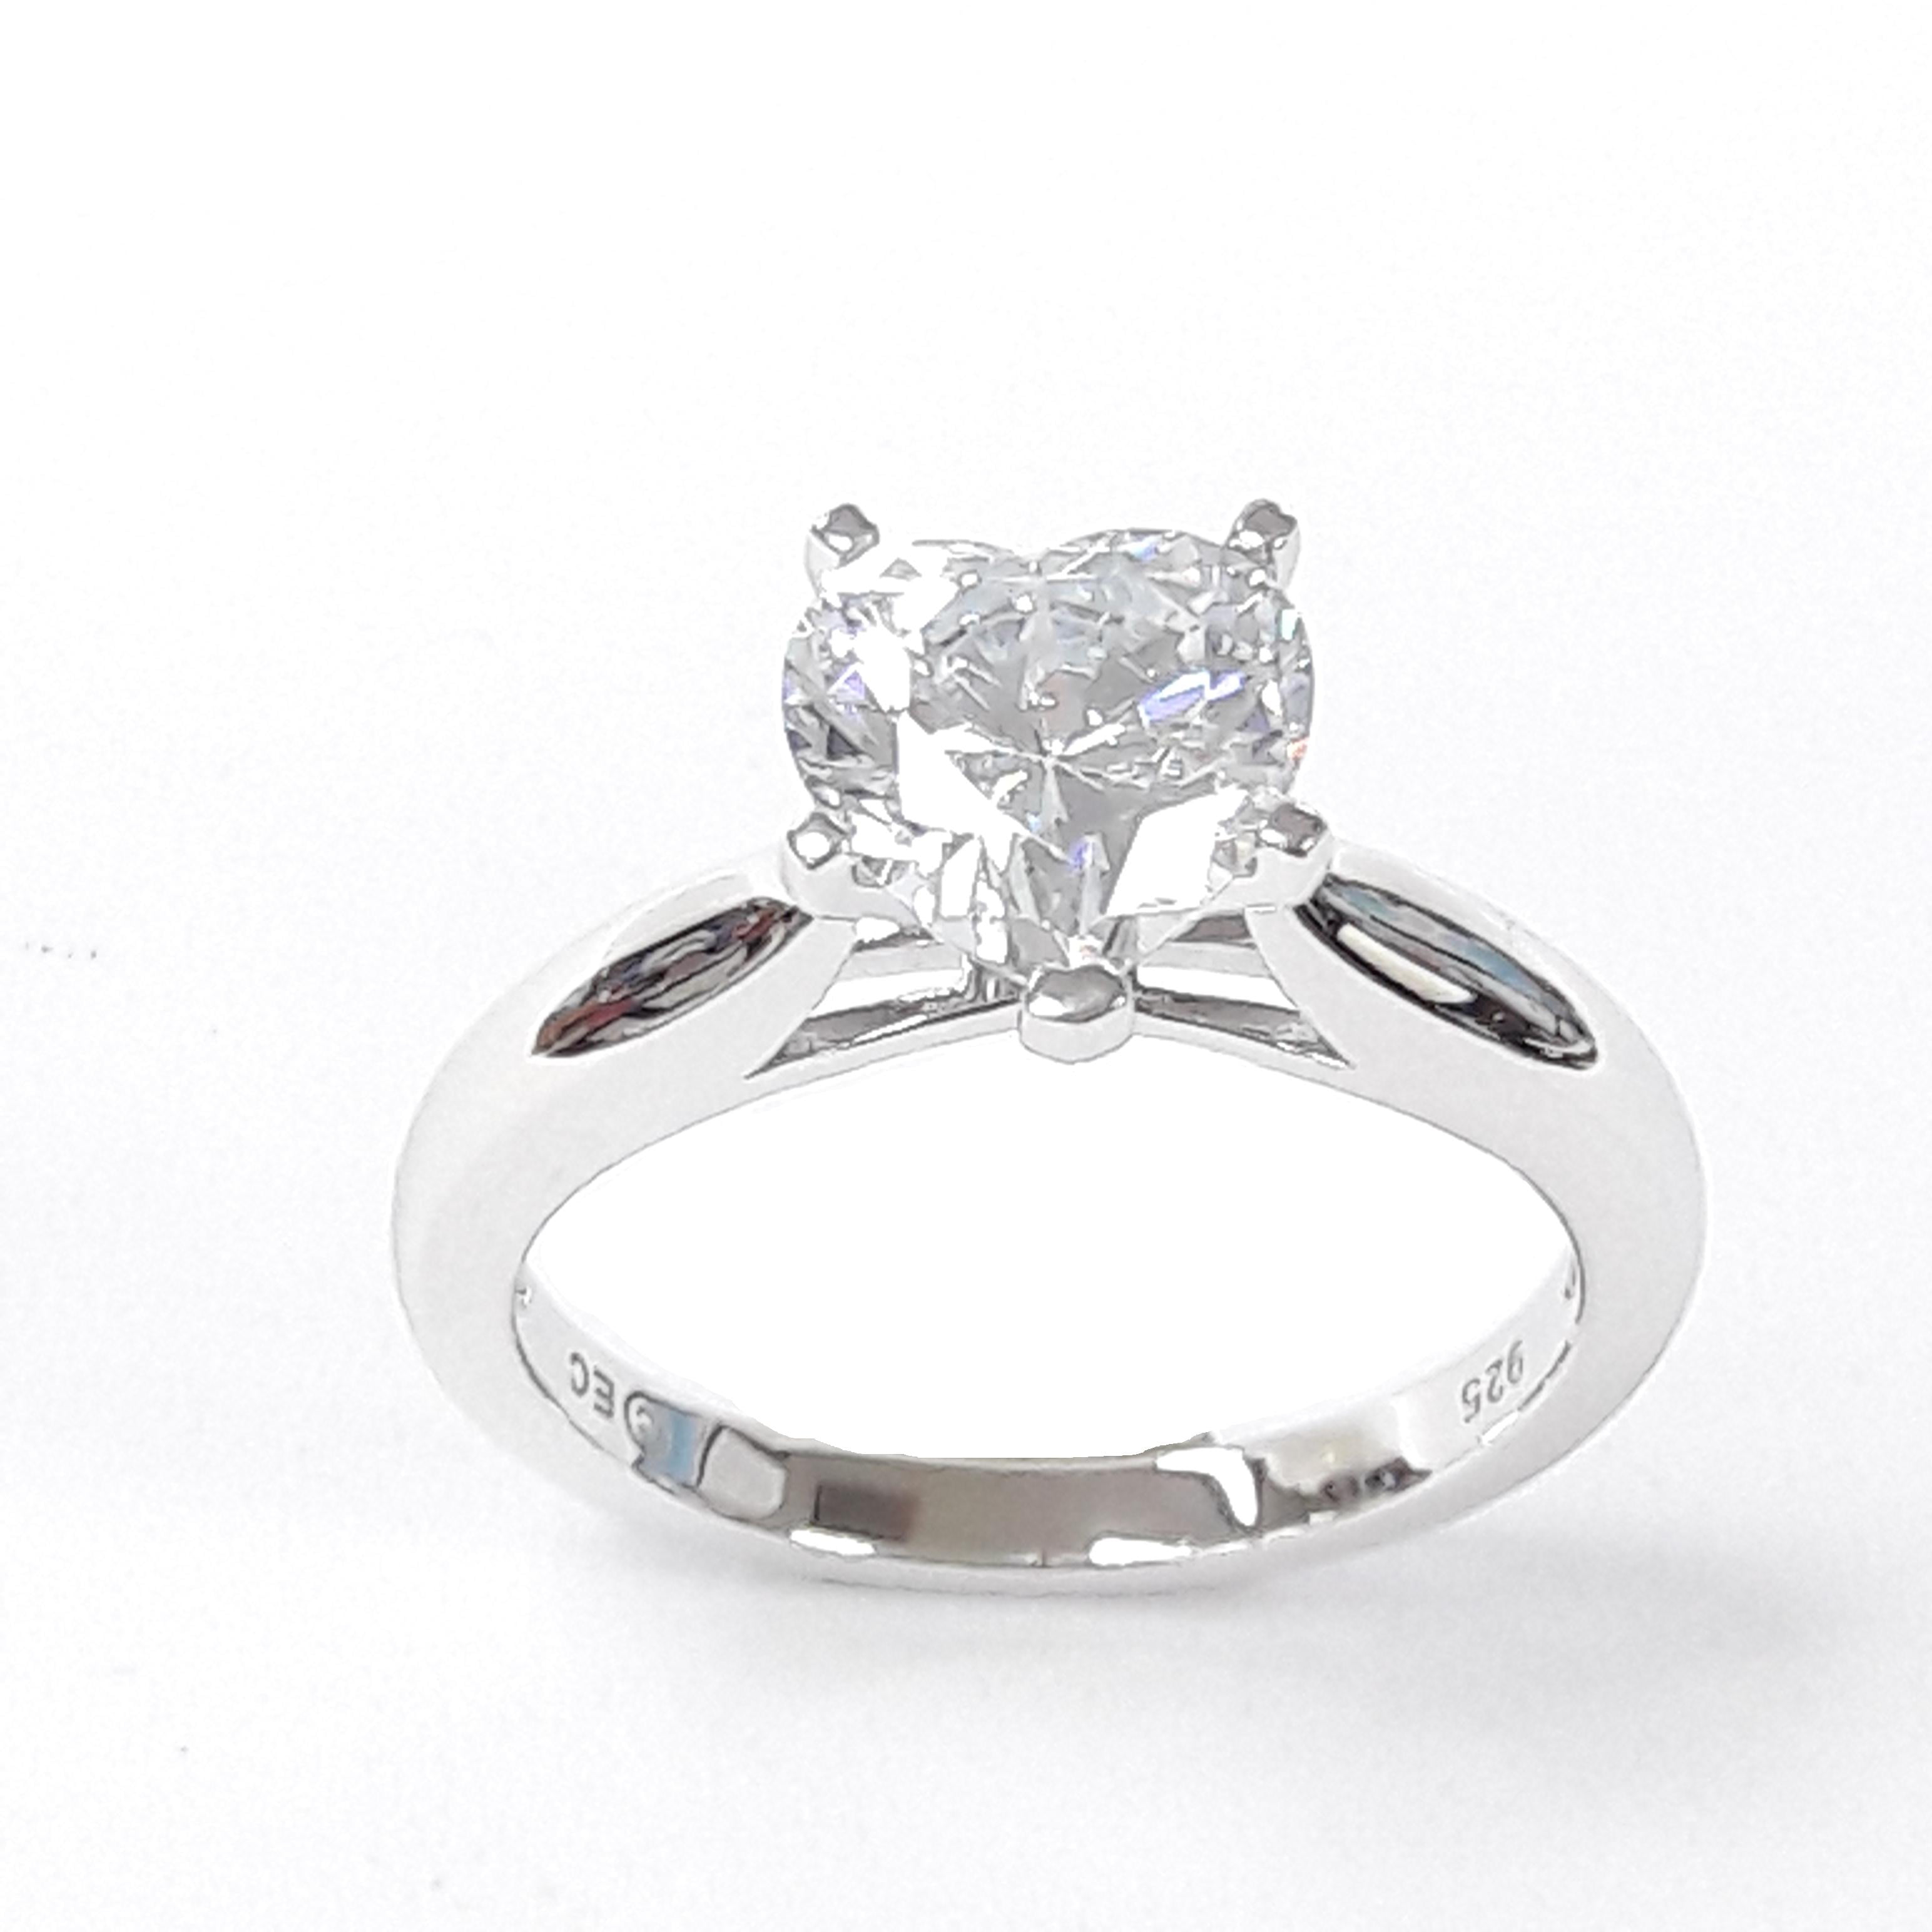 TT Solid RHODIUM 925 Sterling Silver Love Heart Engagement Wedding Ring RW30